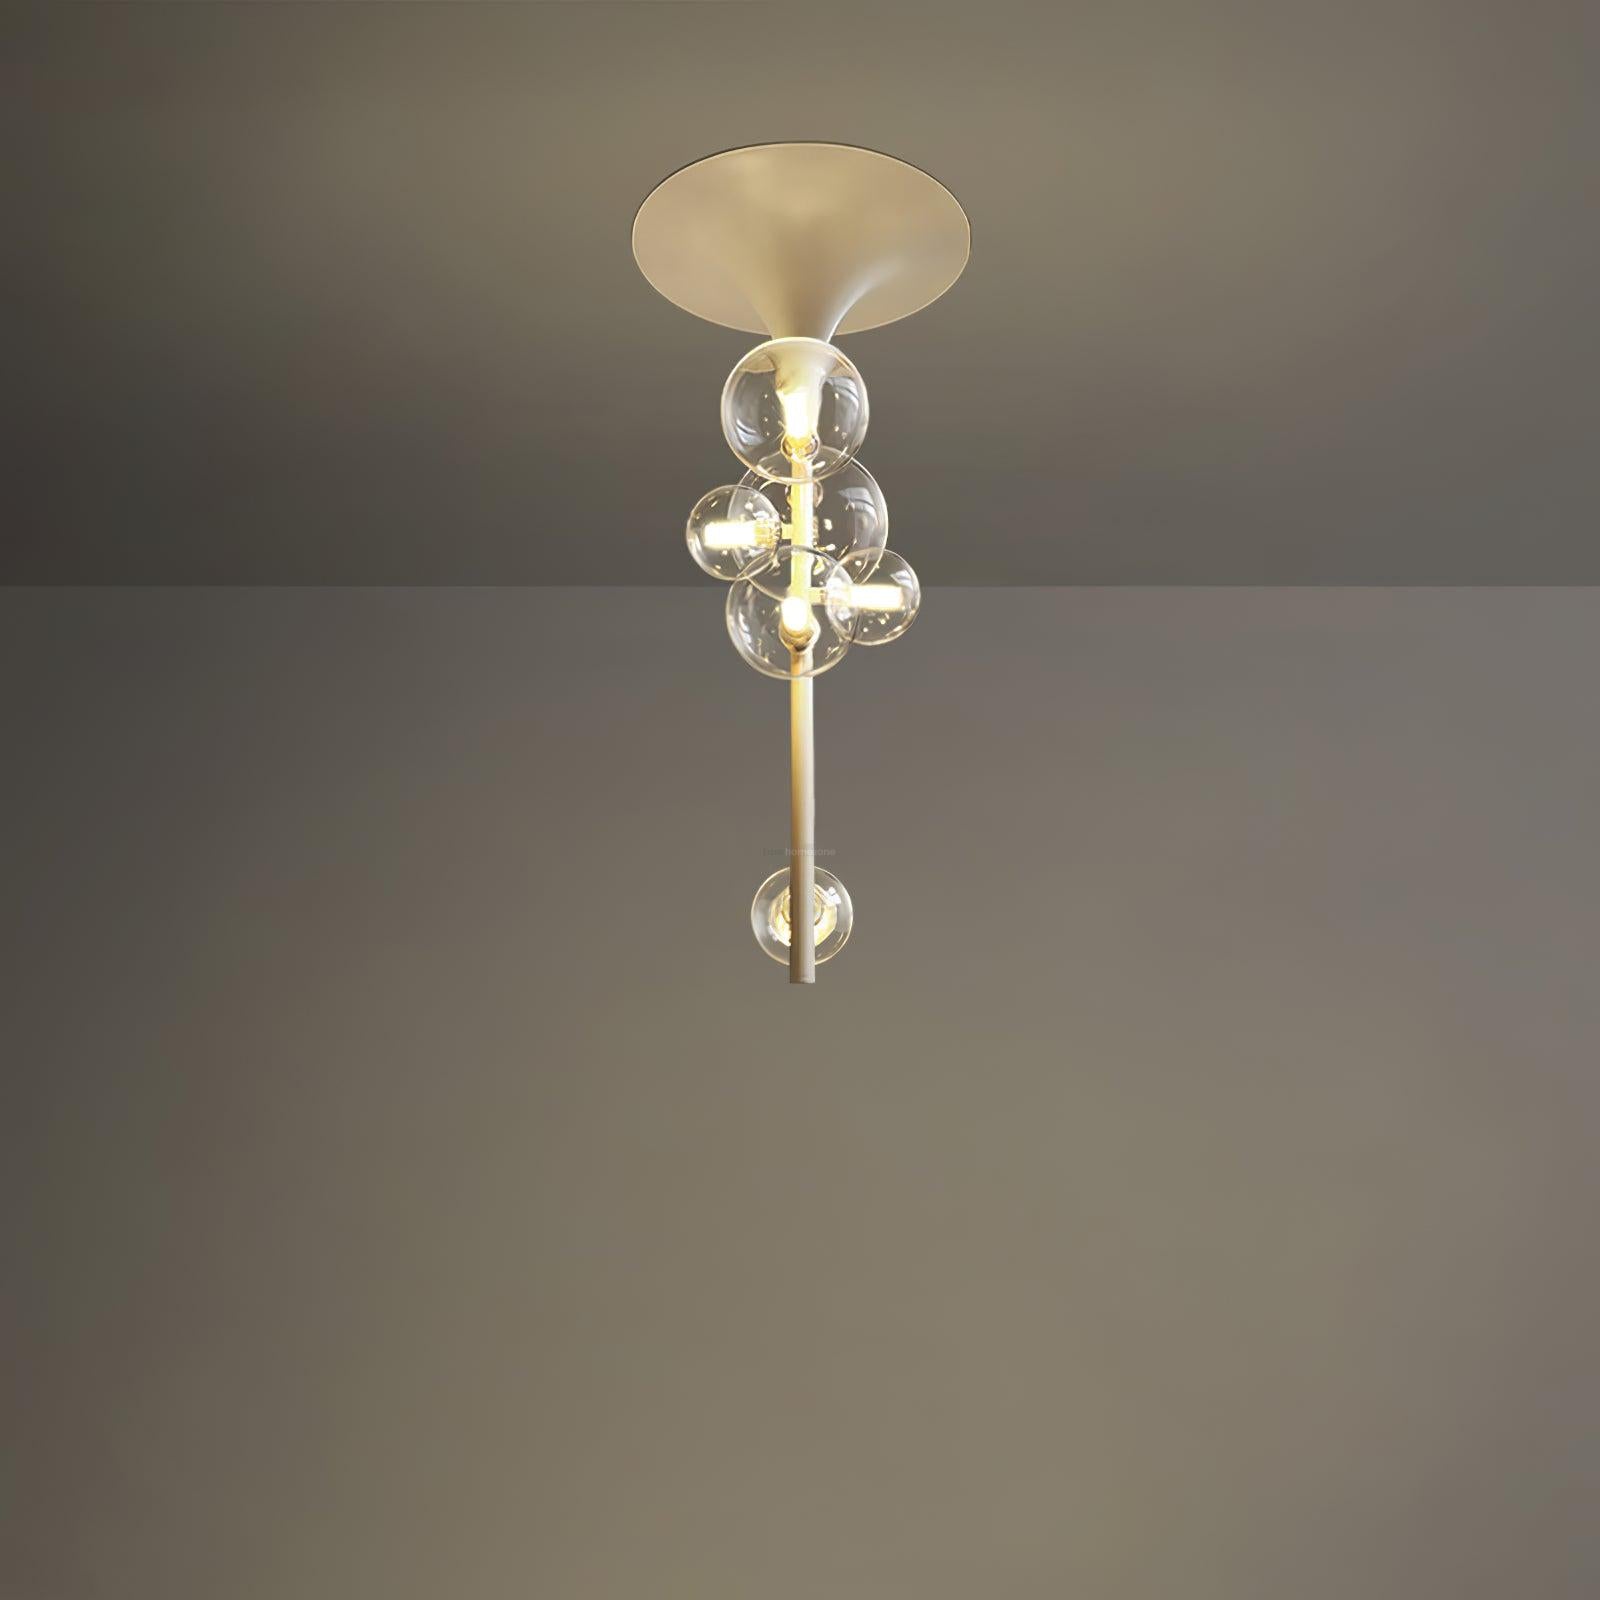 Hermann Horn Ceiling Light with 6/7/10 heads